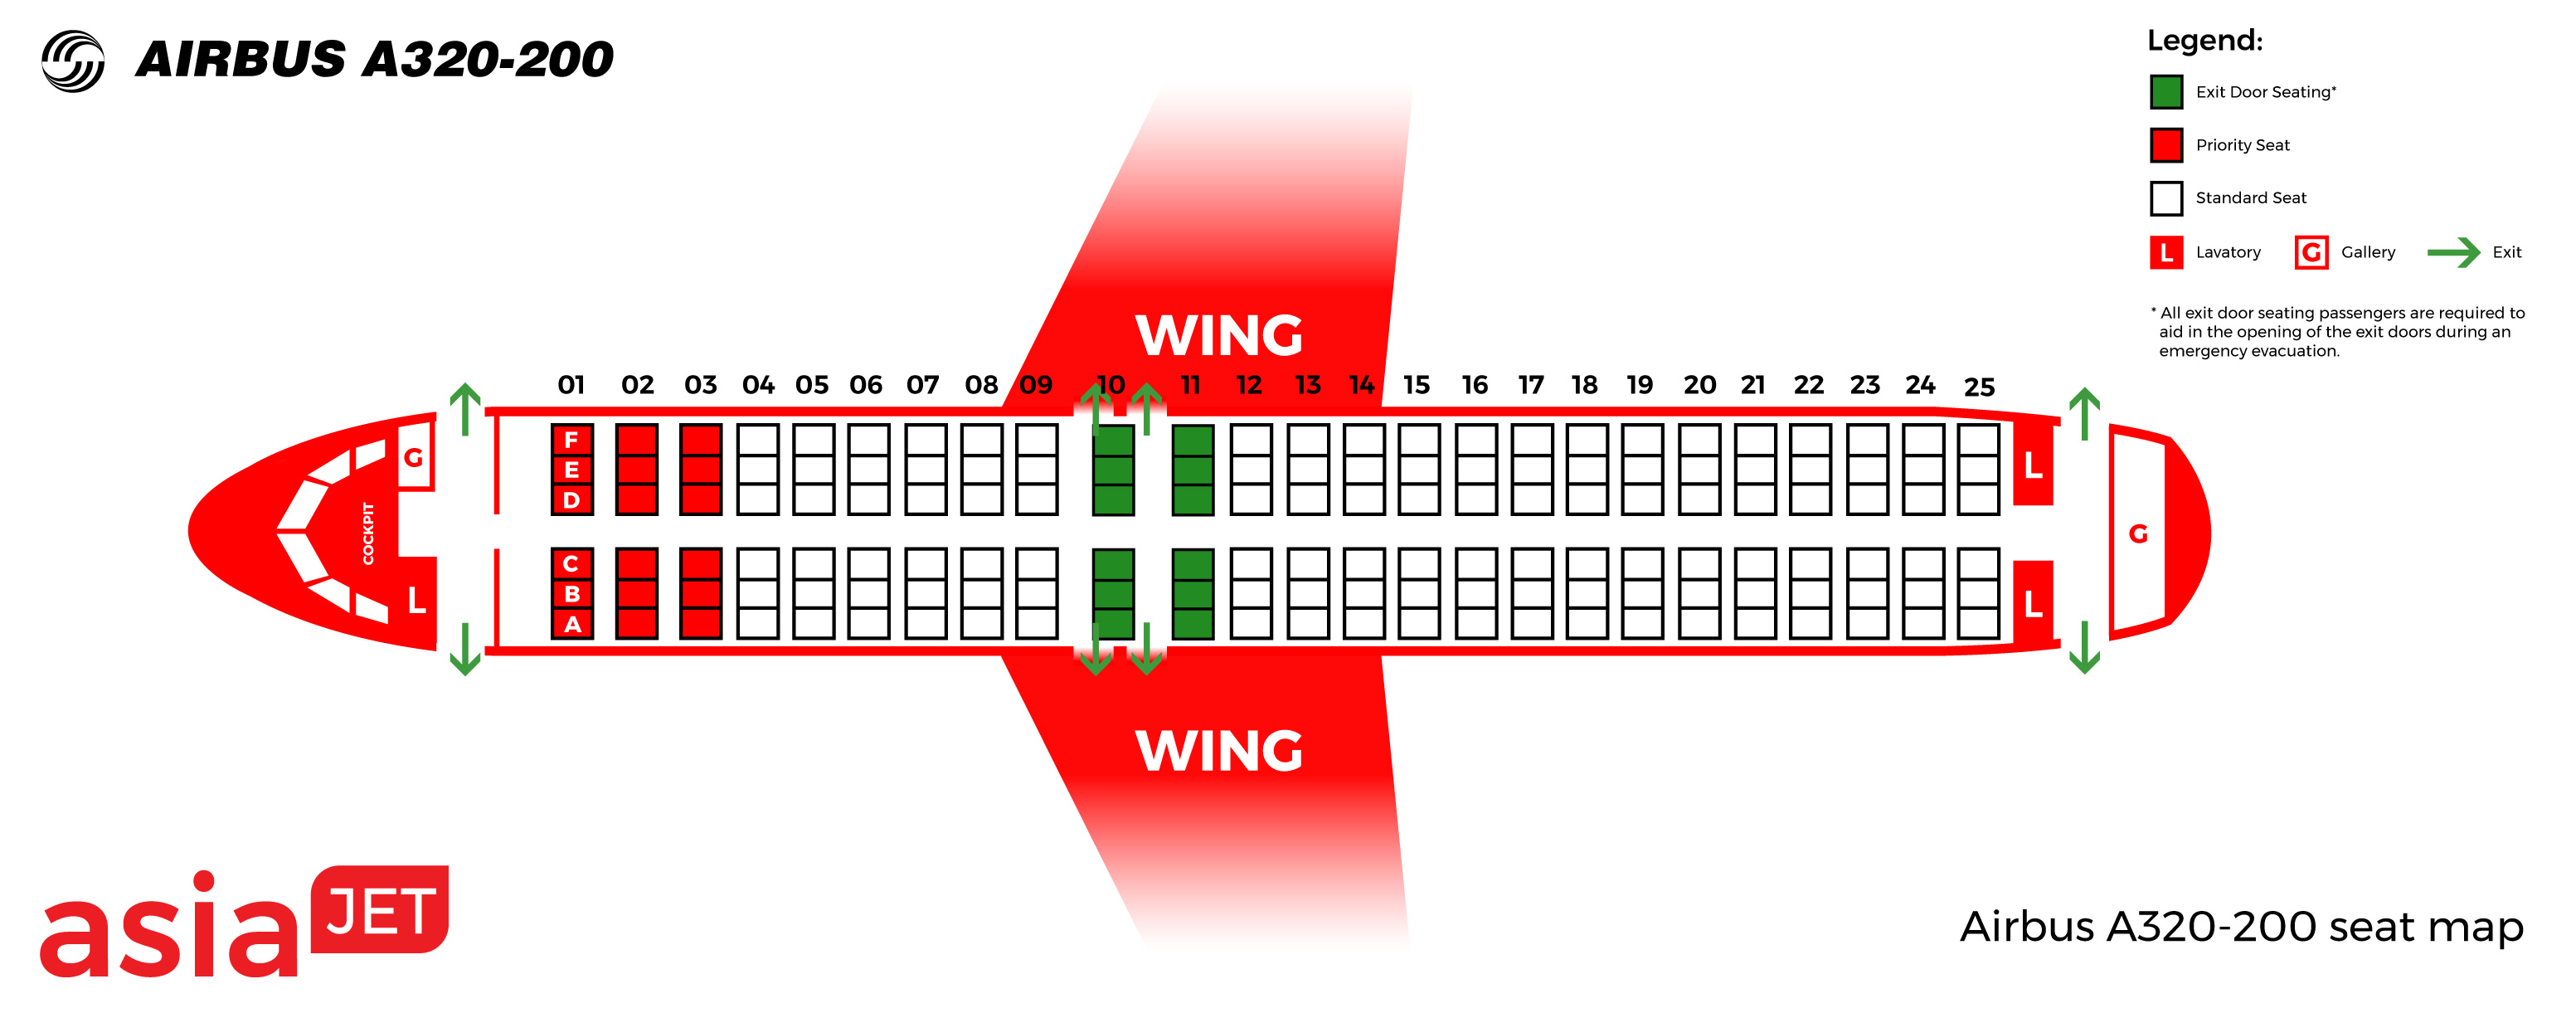 Airbus a320 схема салона ред Вингс